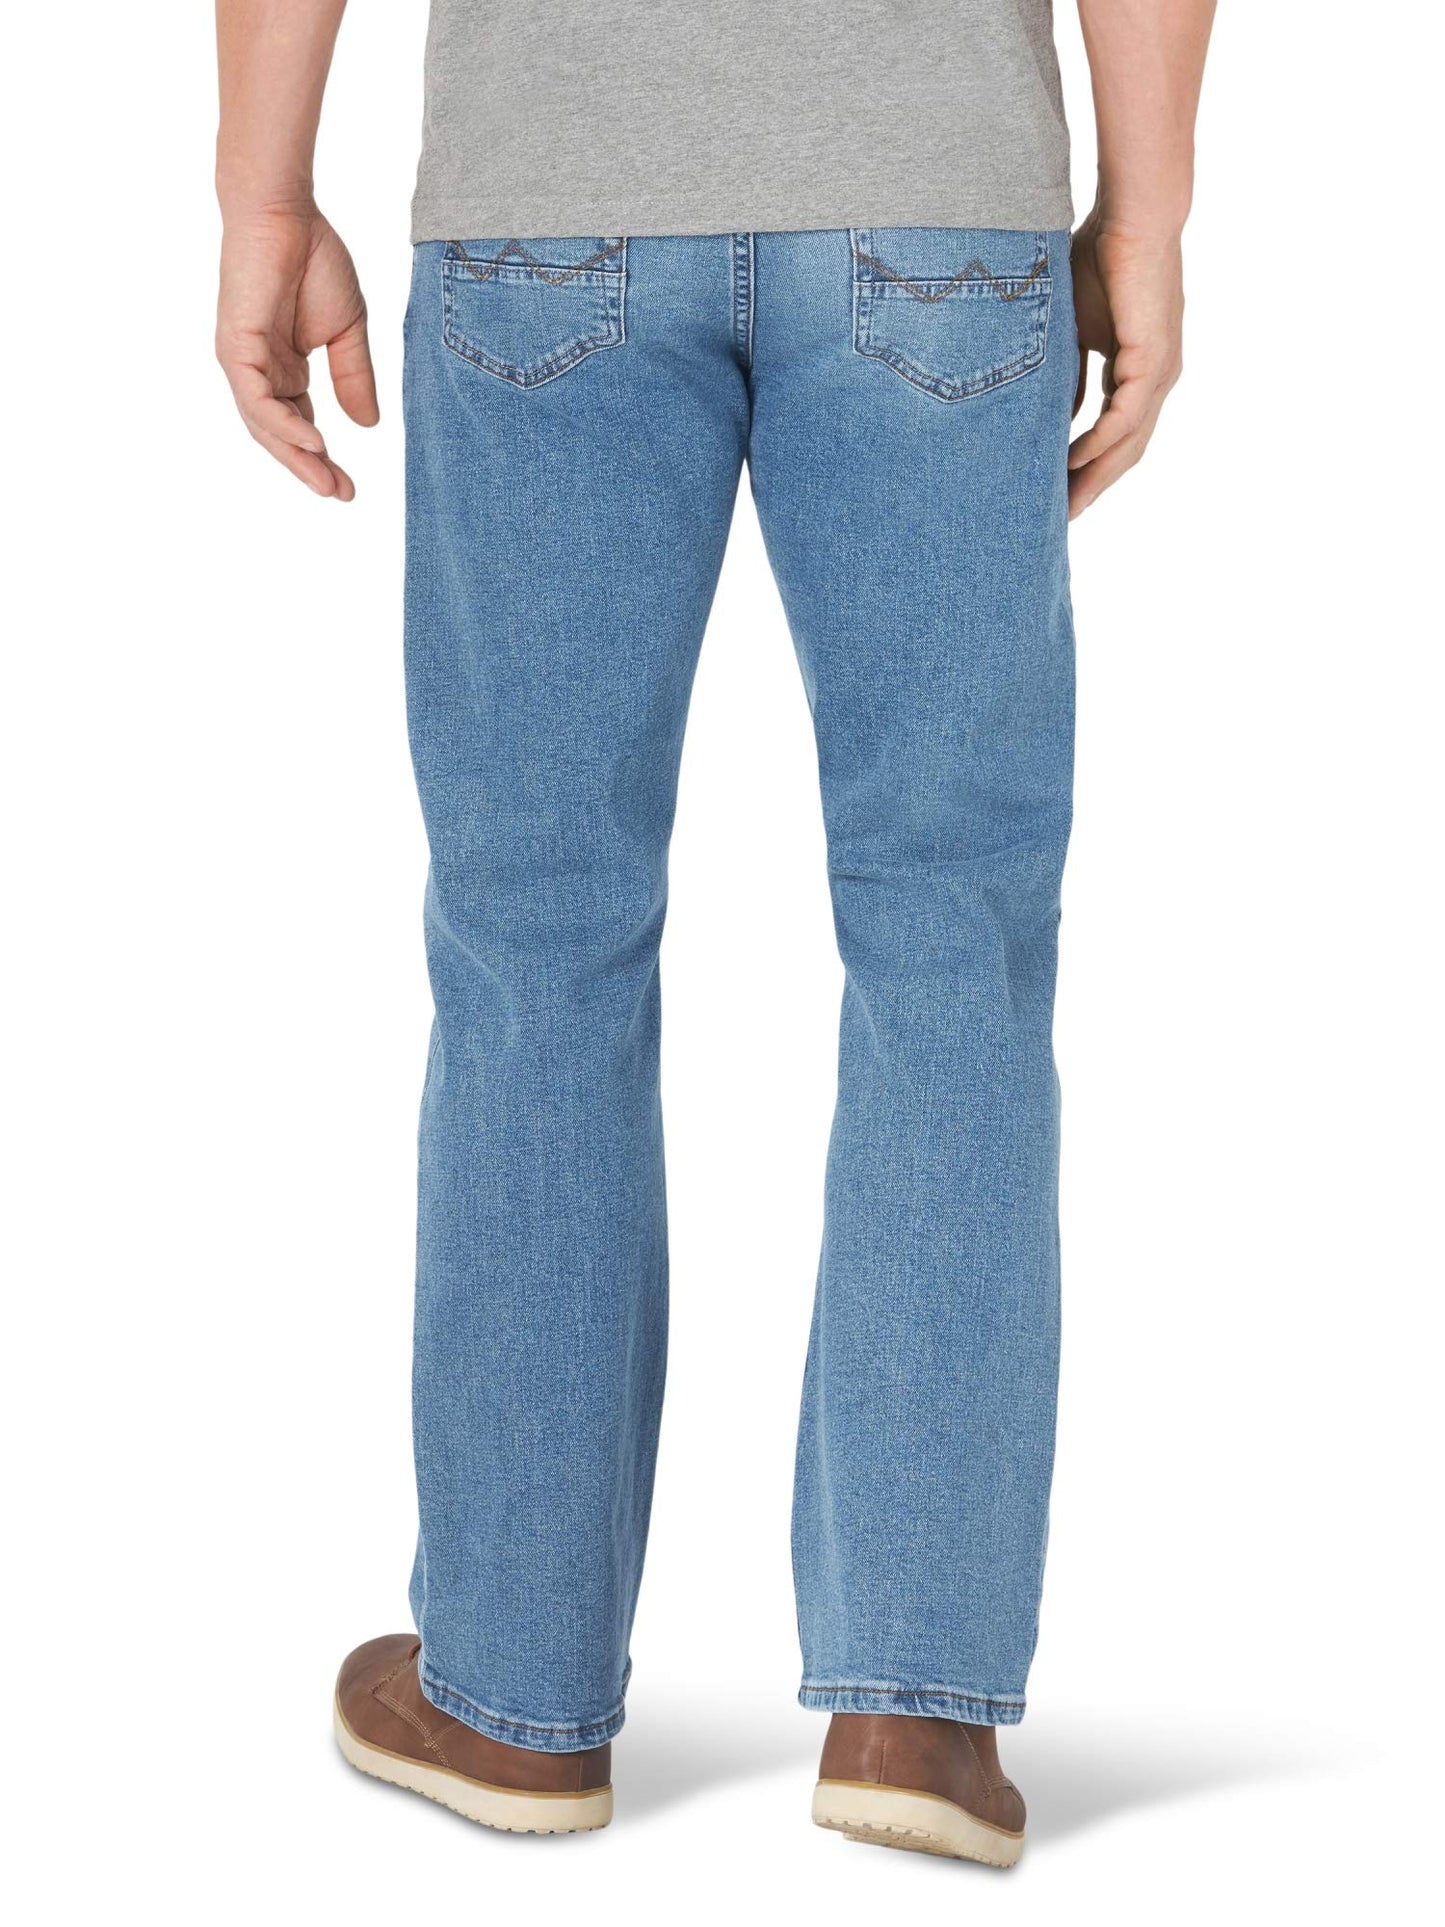 Five Star Premium Slim Straight Jeans (32x32, Clayton)